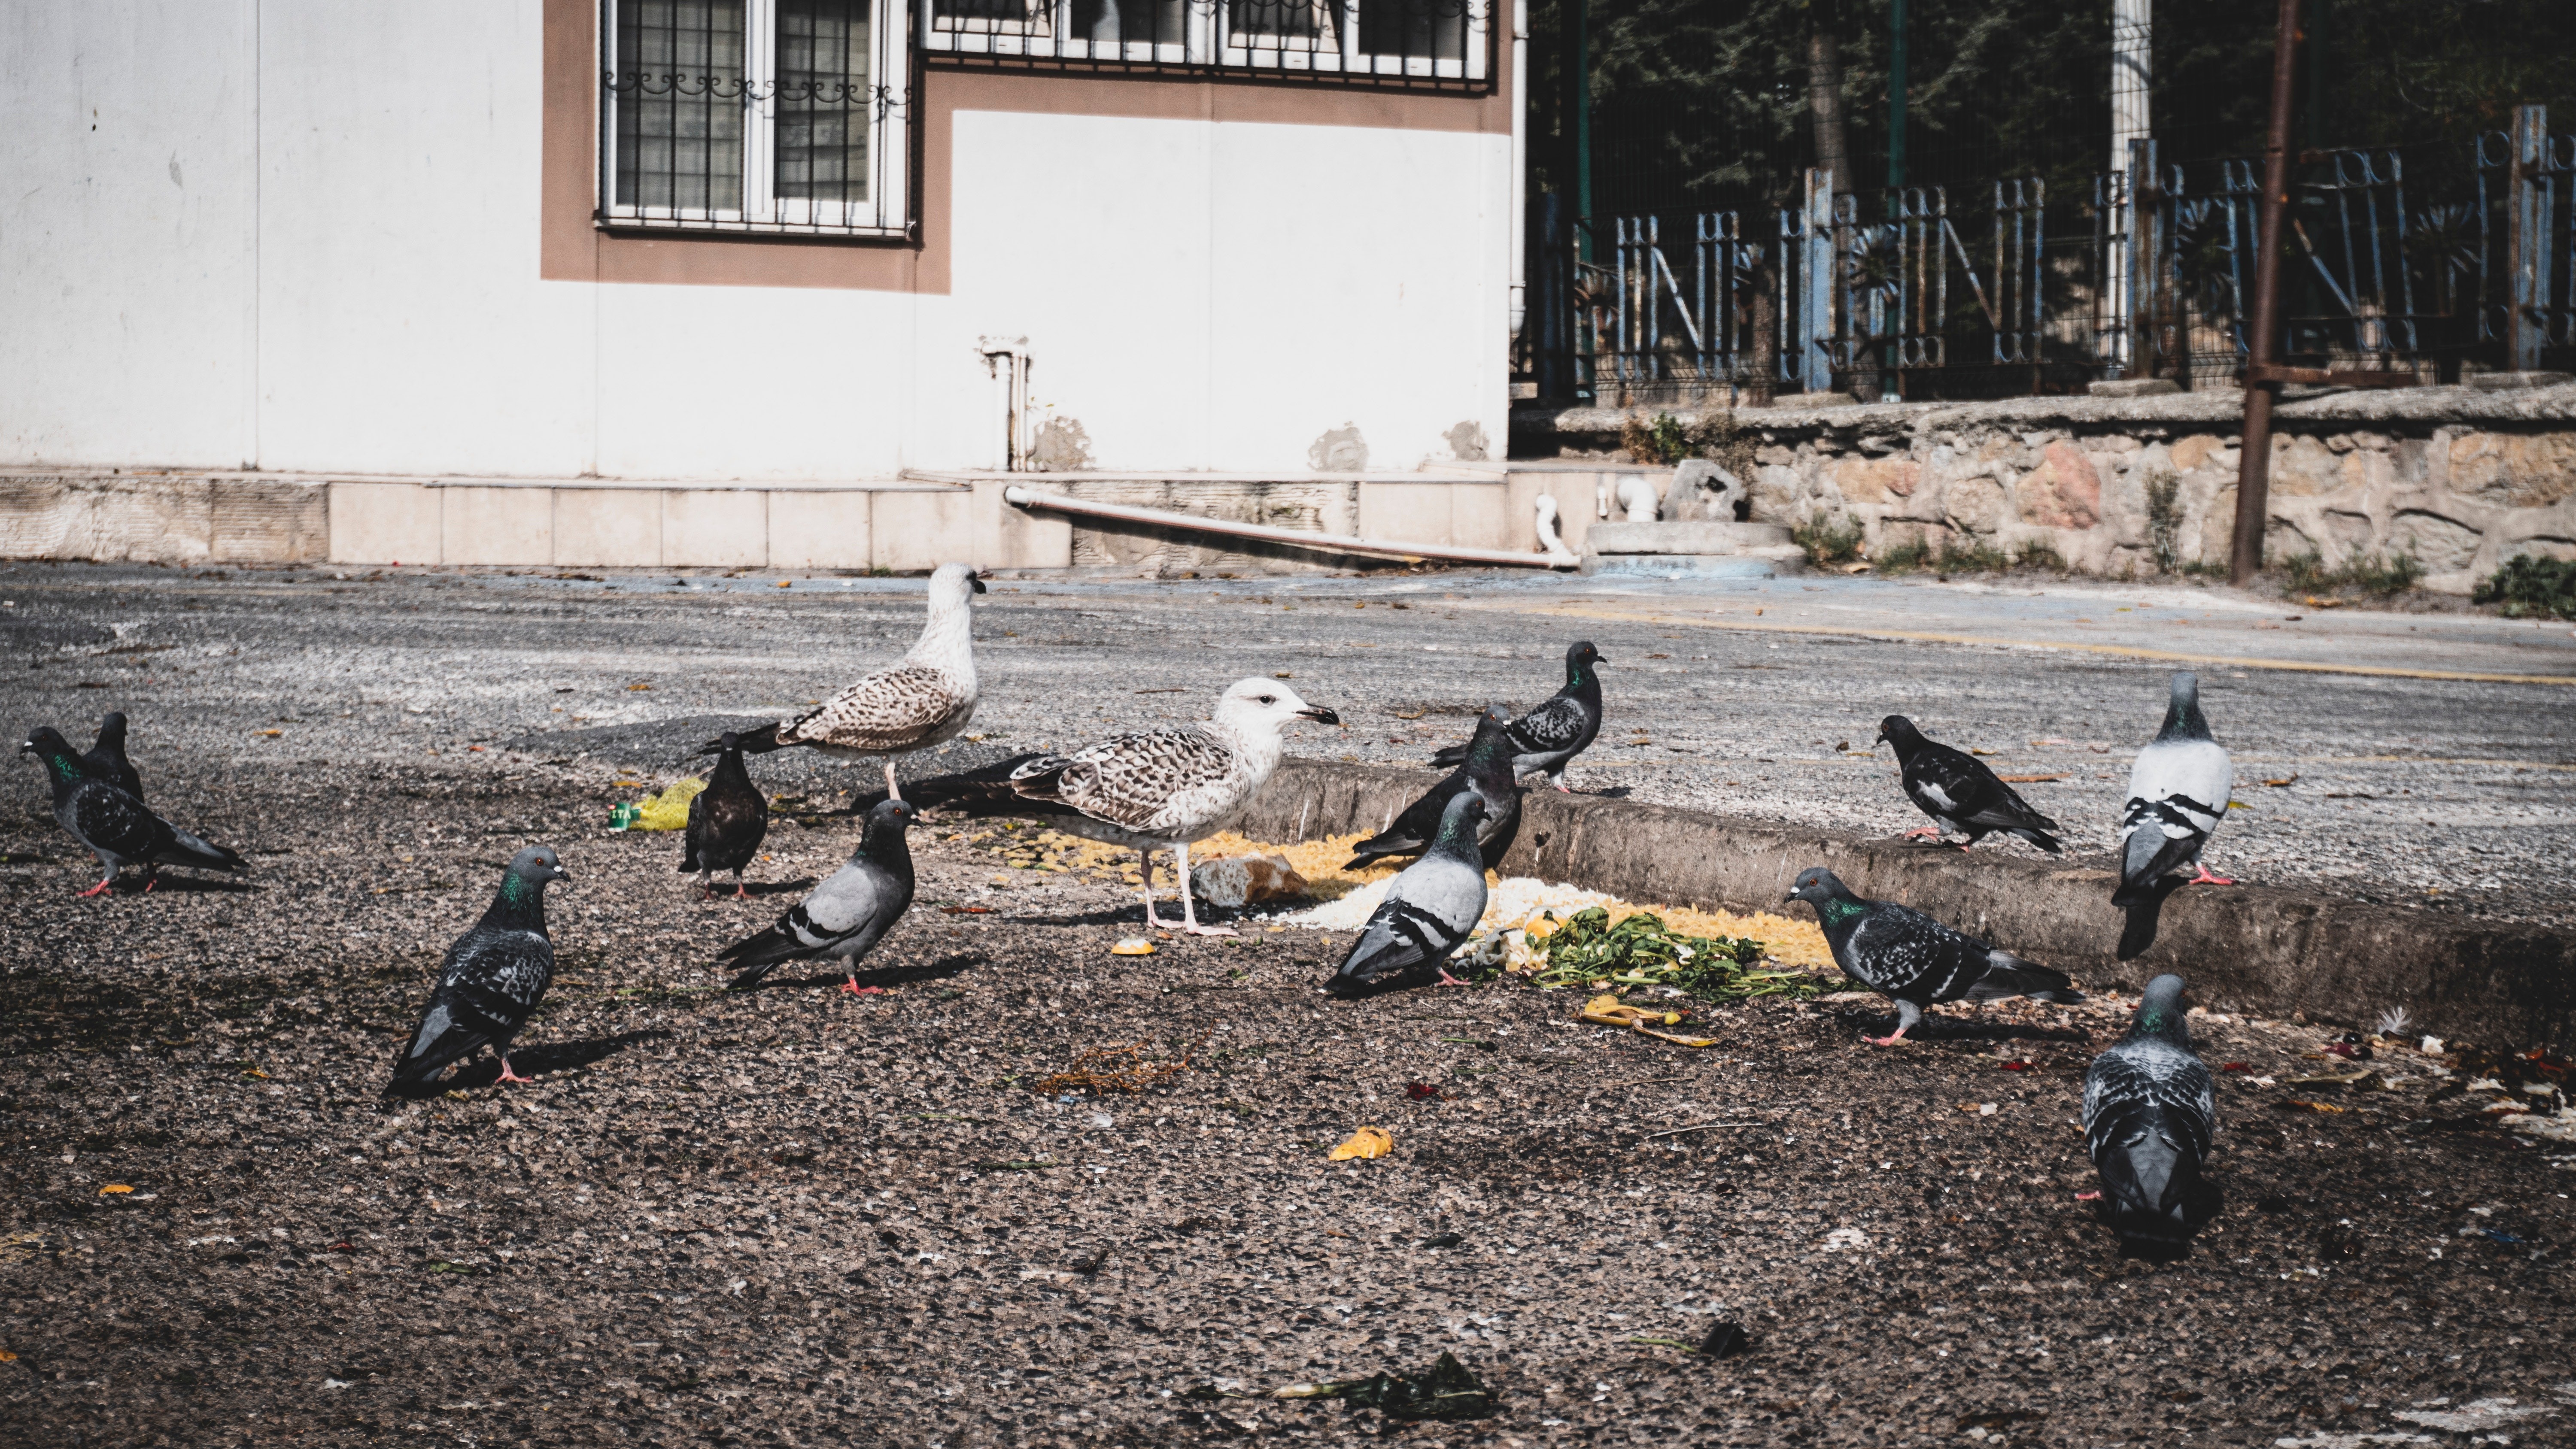 Pombos comendo restos de comida (Foto: Tugay Aydin/Pexels)